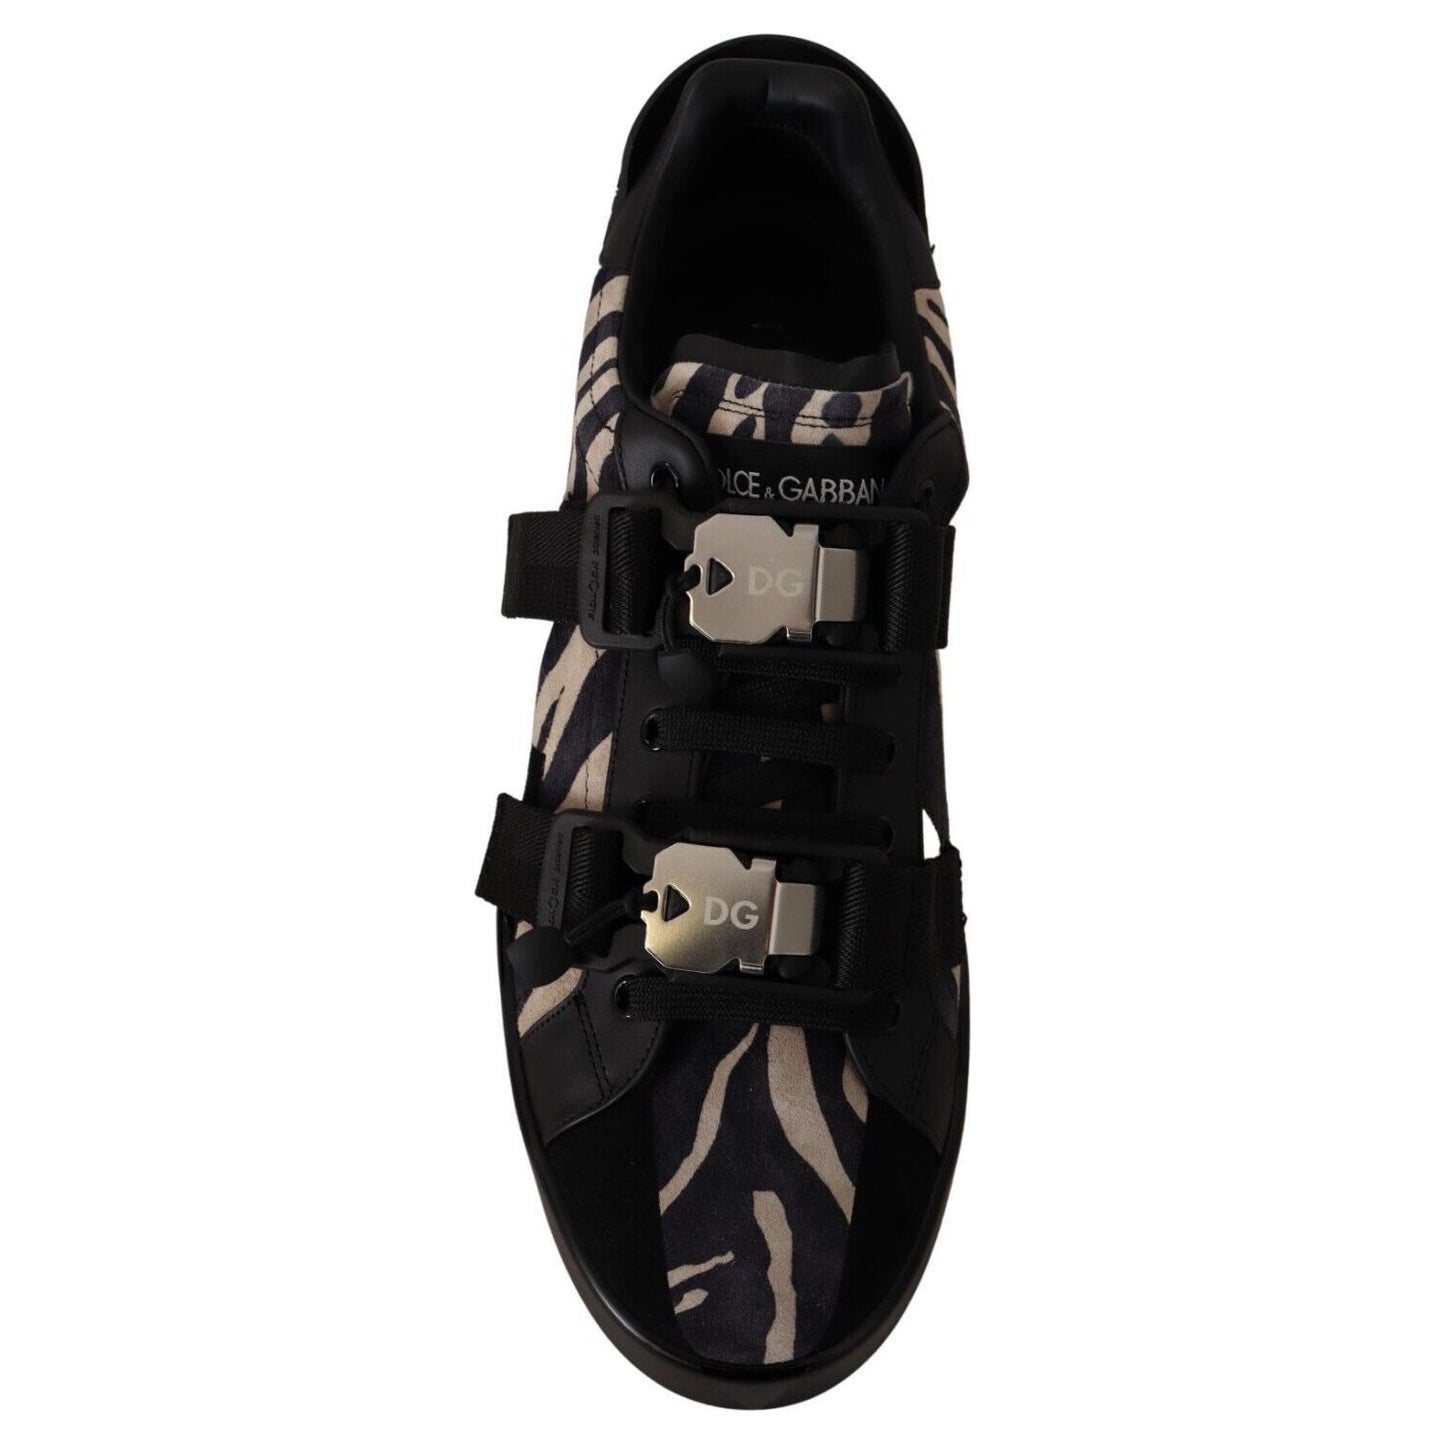 Dolce & Gabbana Zebra Suede Low Top Fashion Sneakers black-white-zebra-suede-rubber-sneakers-shoes-2 MAN SNEAKERS s-l1600-5-16-b4287147-b2e.jpg